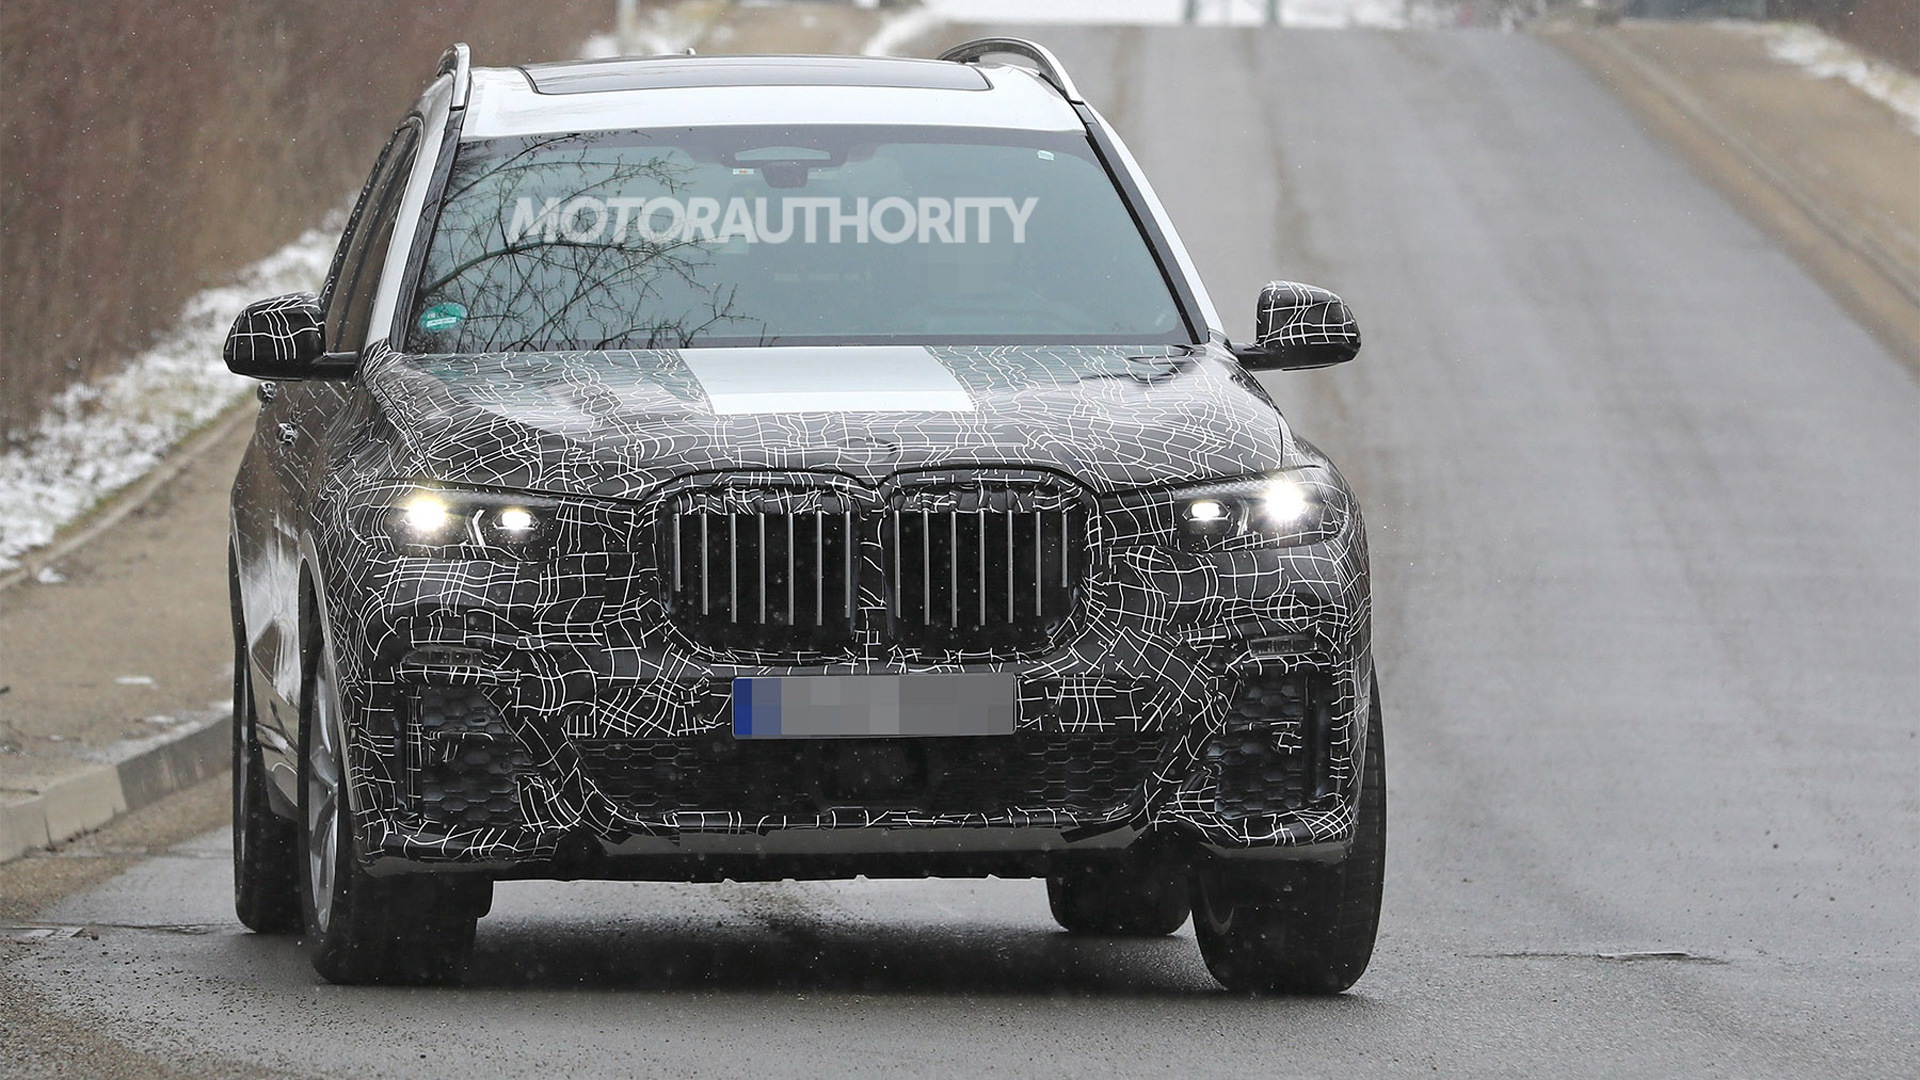 2019 BMW X7 spy shots - Image via S. Baldauf/SB-Medien